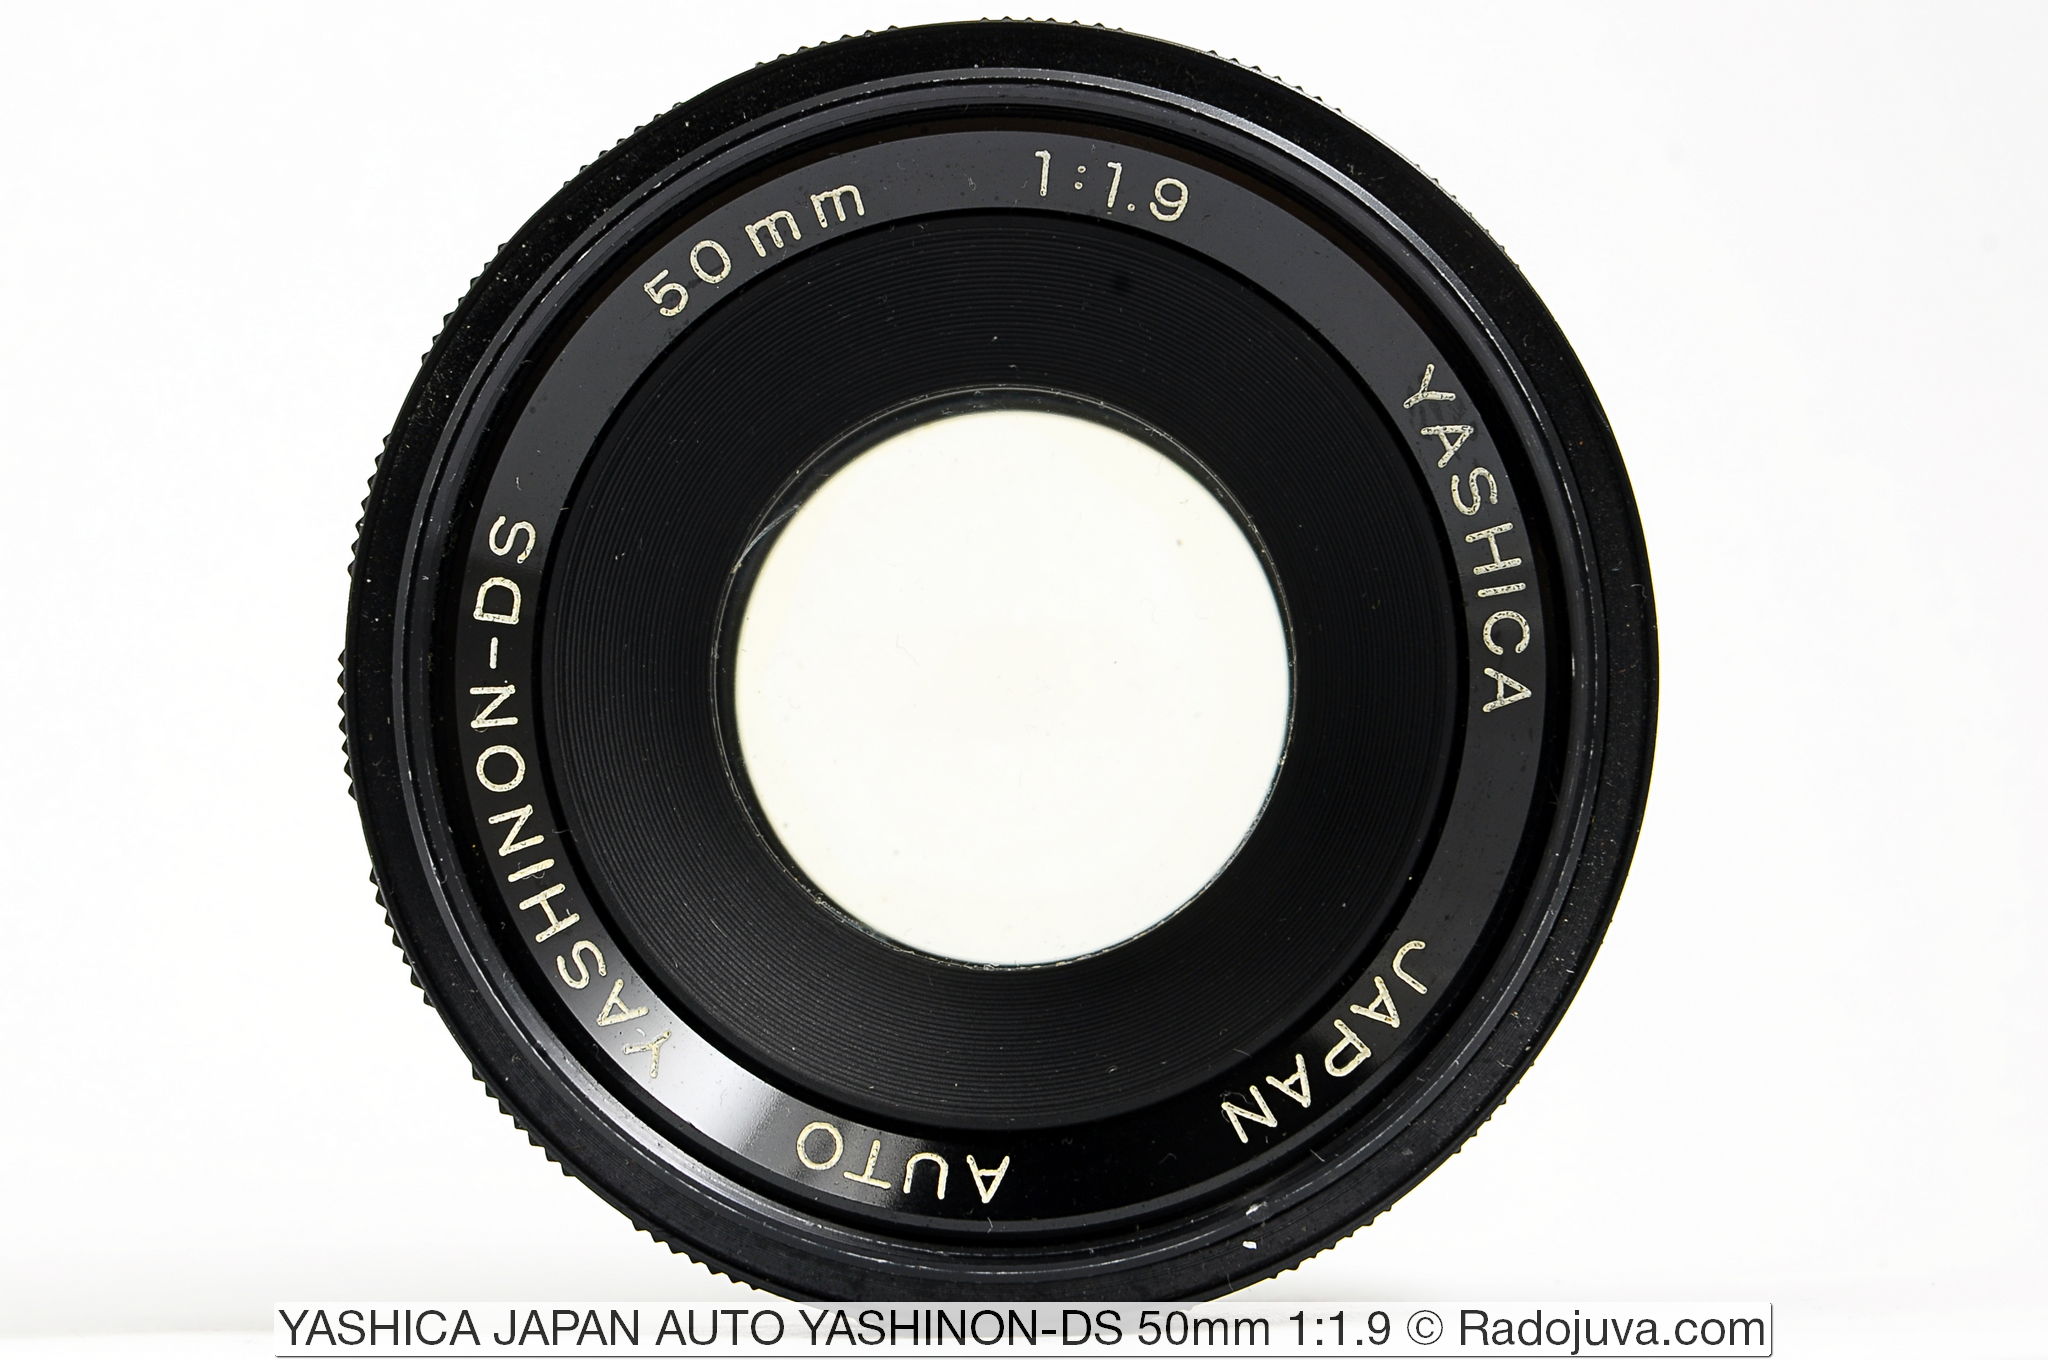 YASHICA JAPAN AUTO YASHINON-DS 50mm 1:1.9